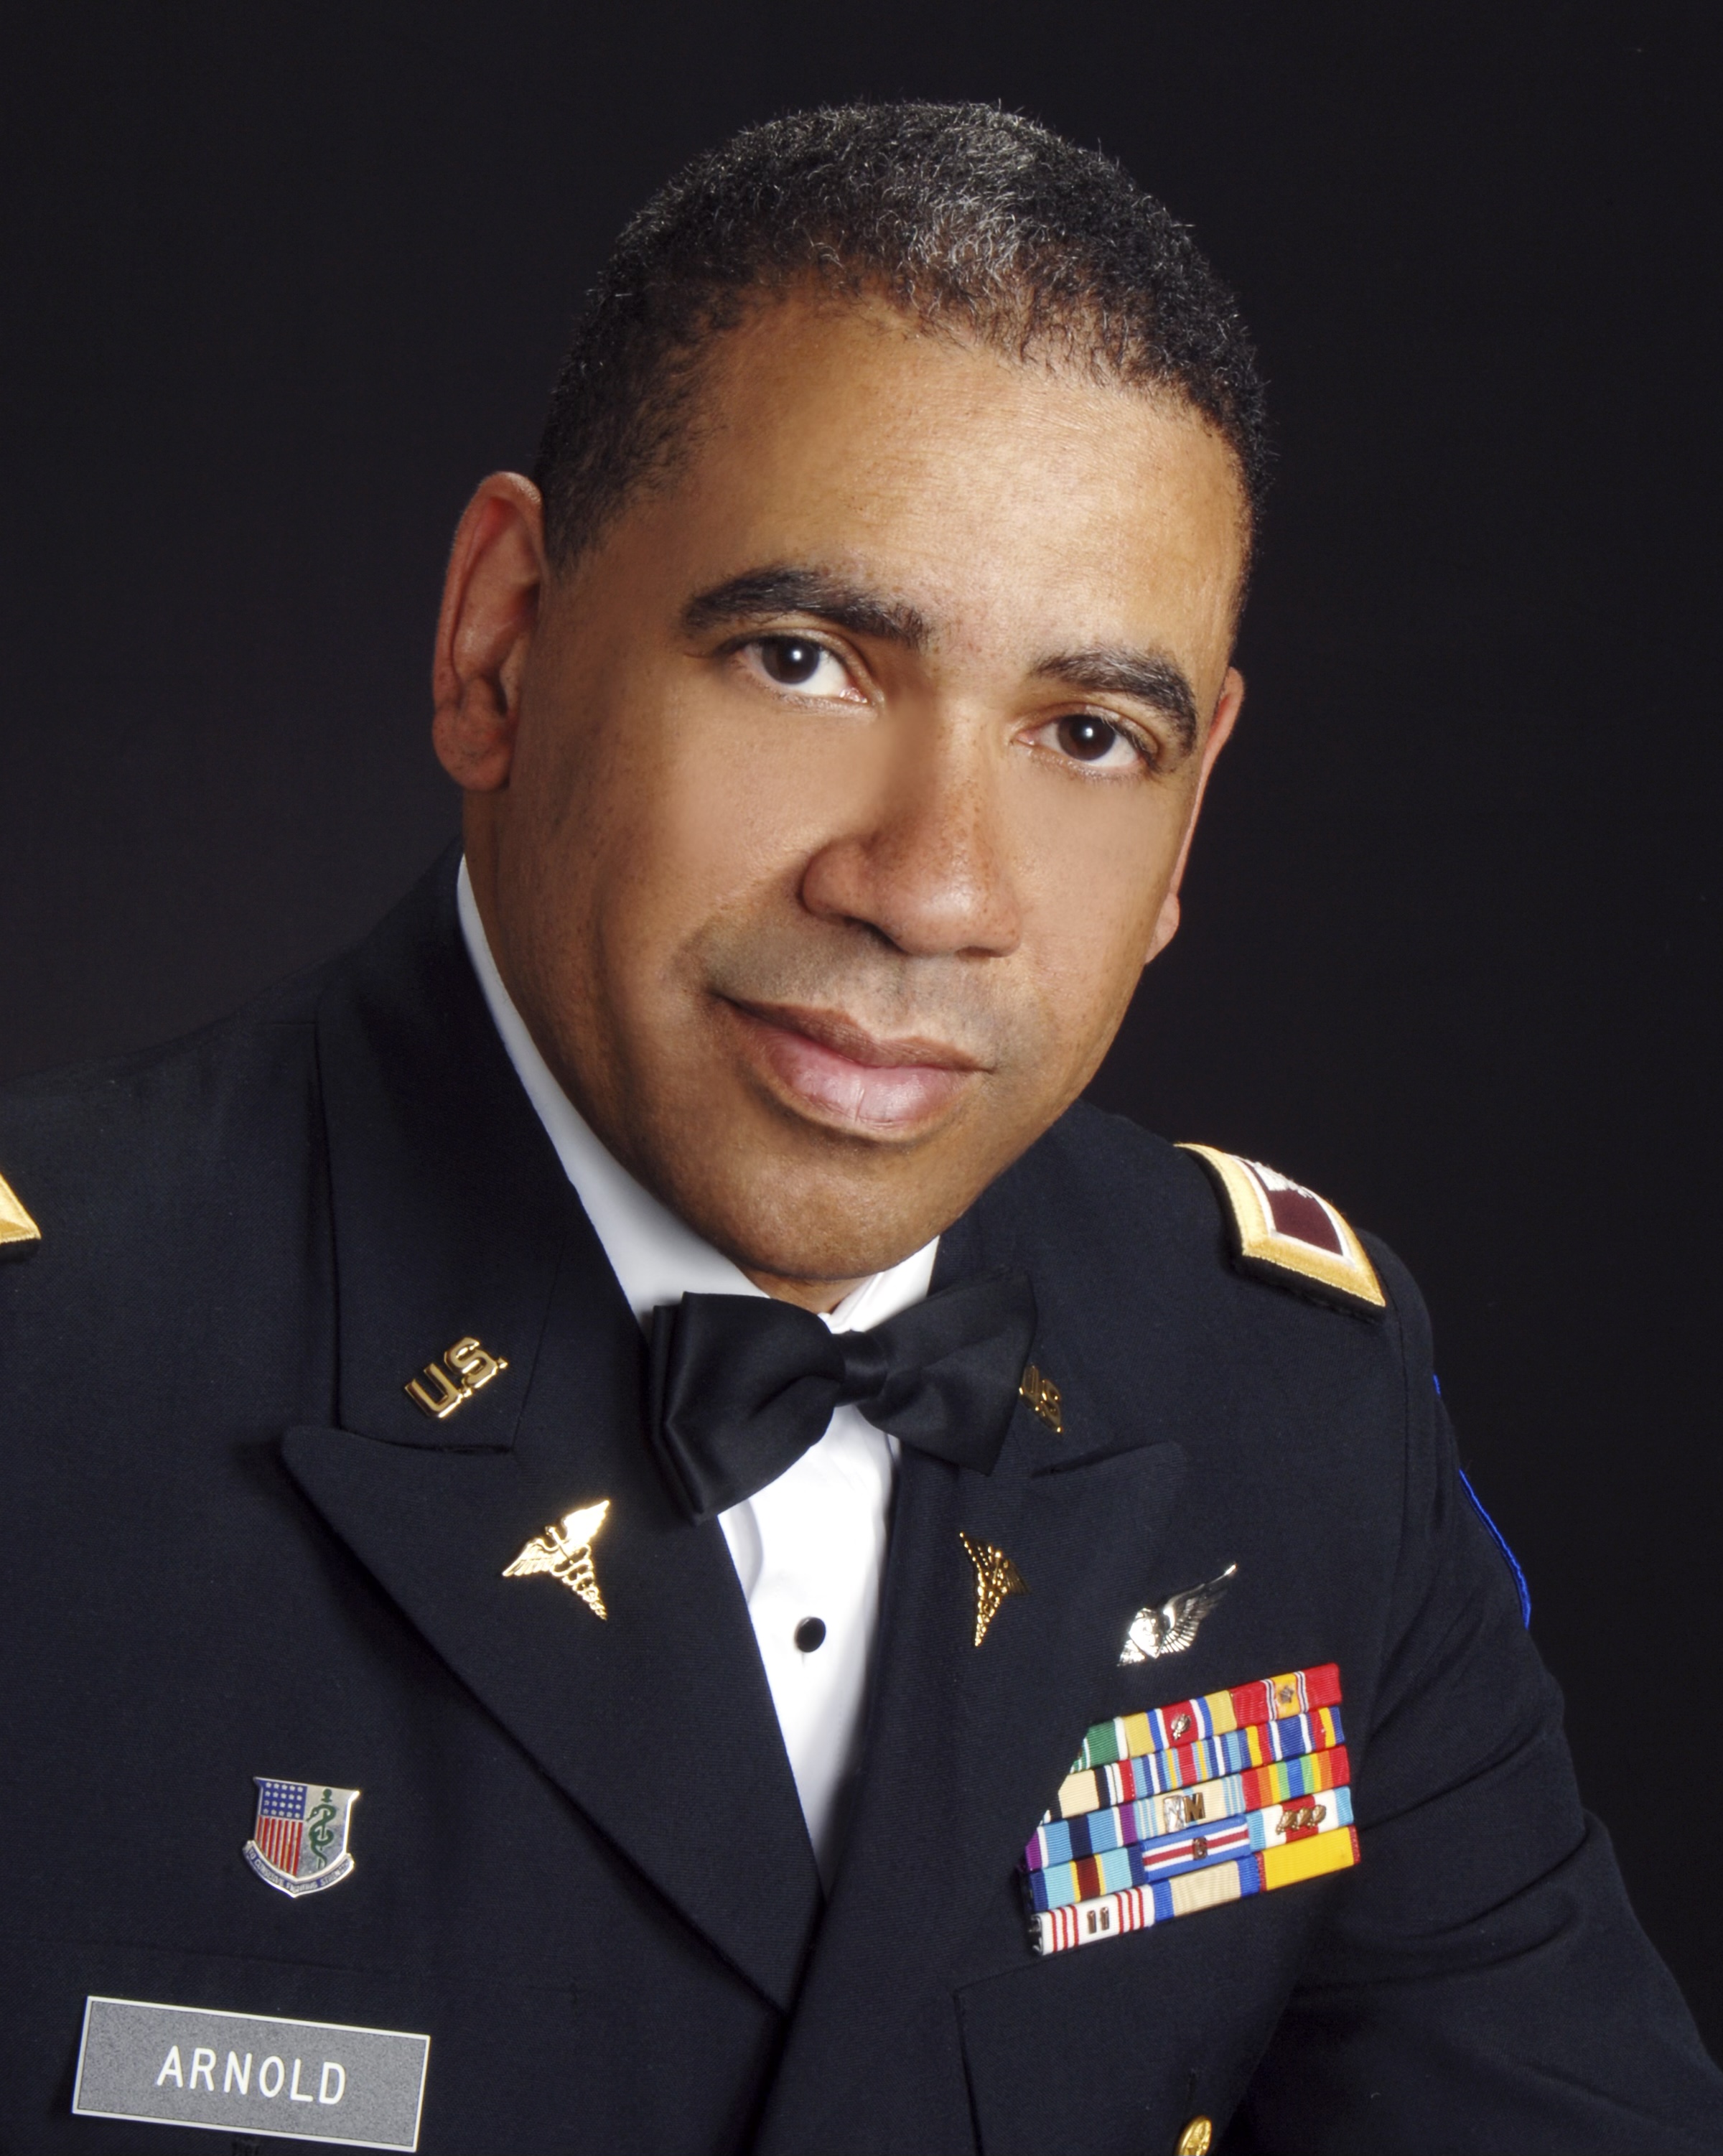 Professional headshot of a Black man wearing his military uniform